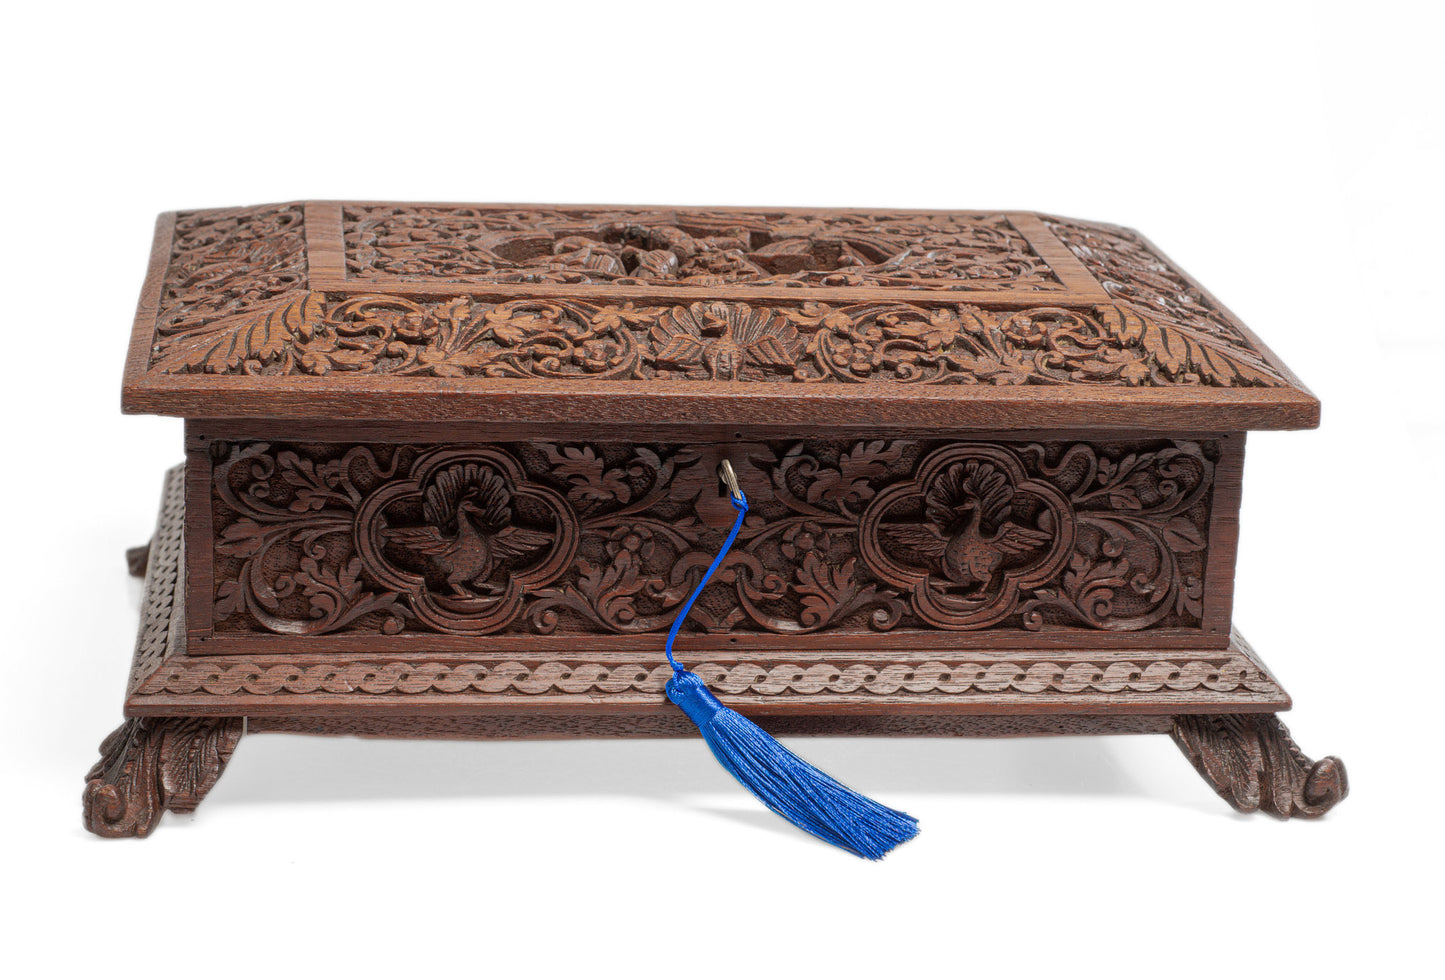 Antique Burmese Carved Wooden Table Box with Kinnara, Elephants & Peacocks (Code 2660)